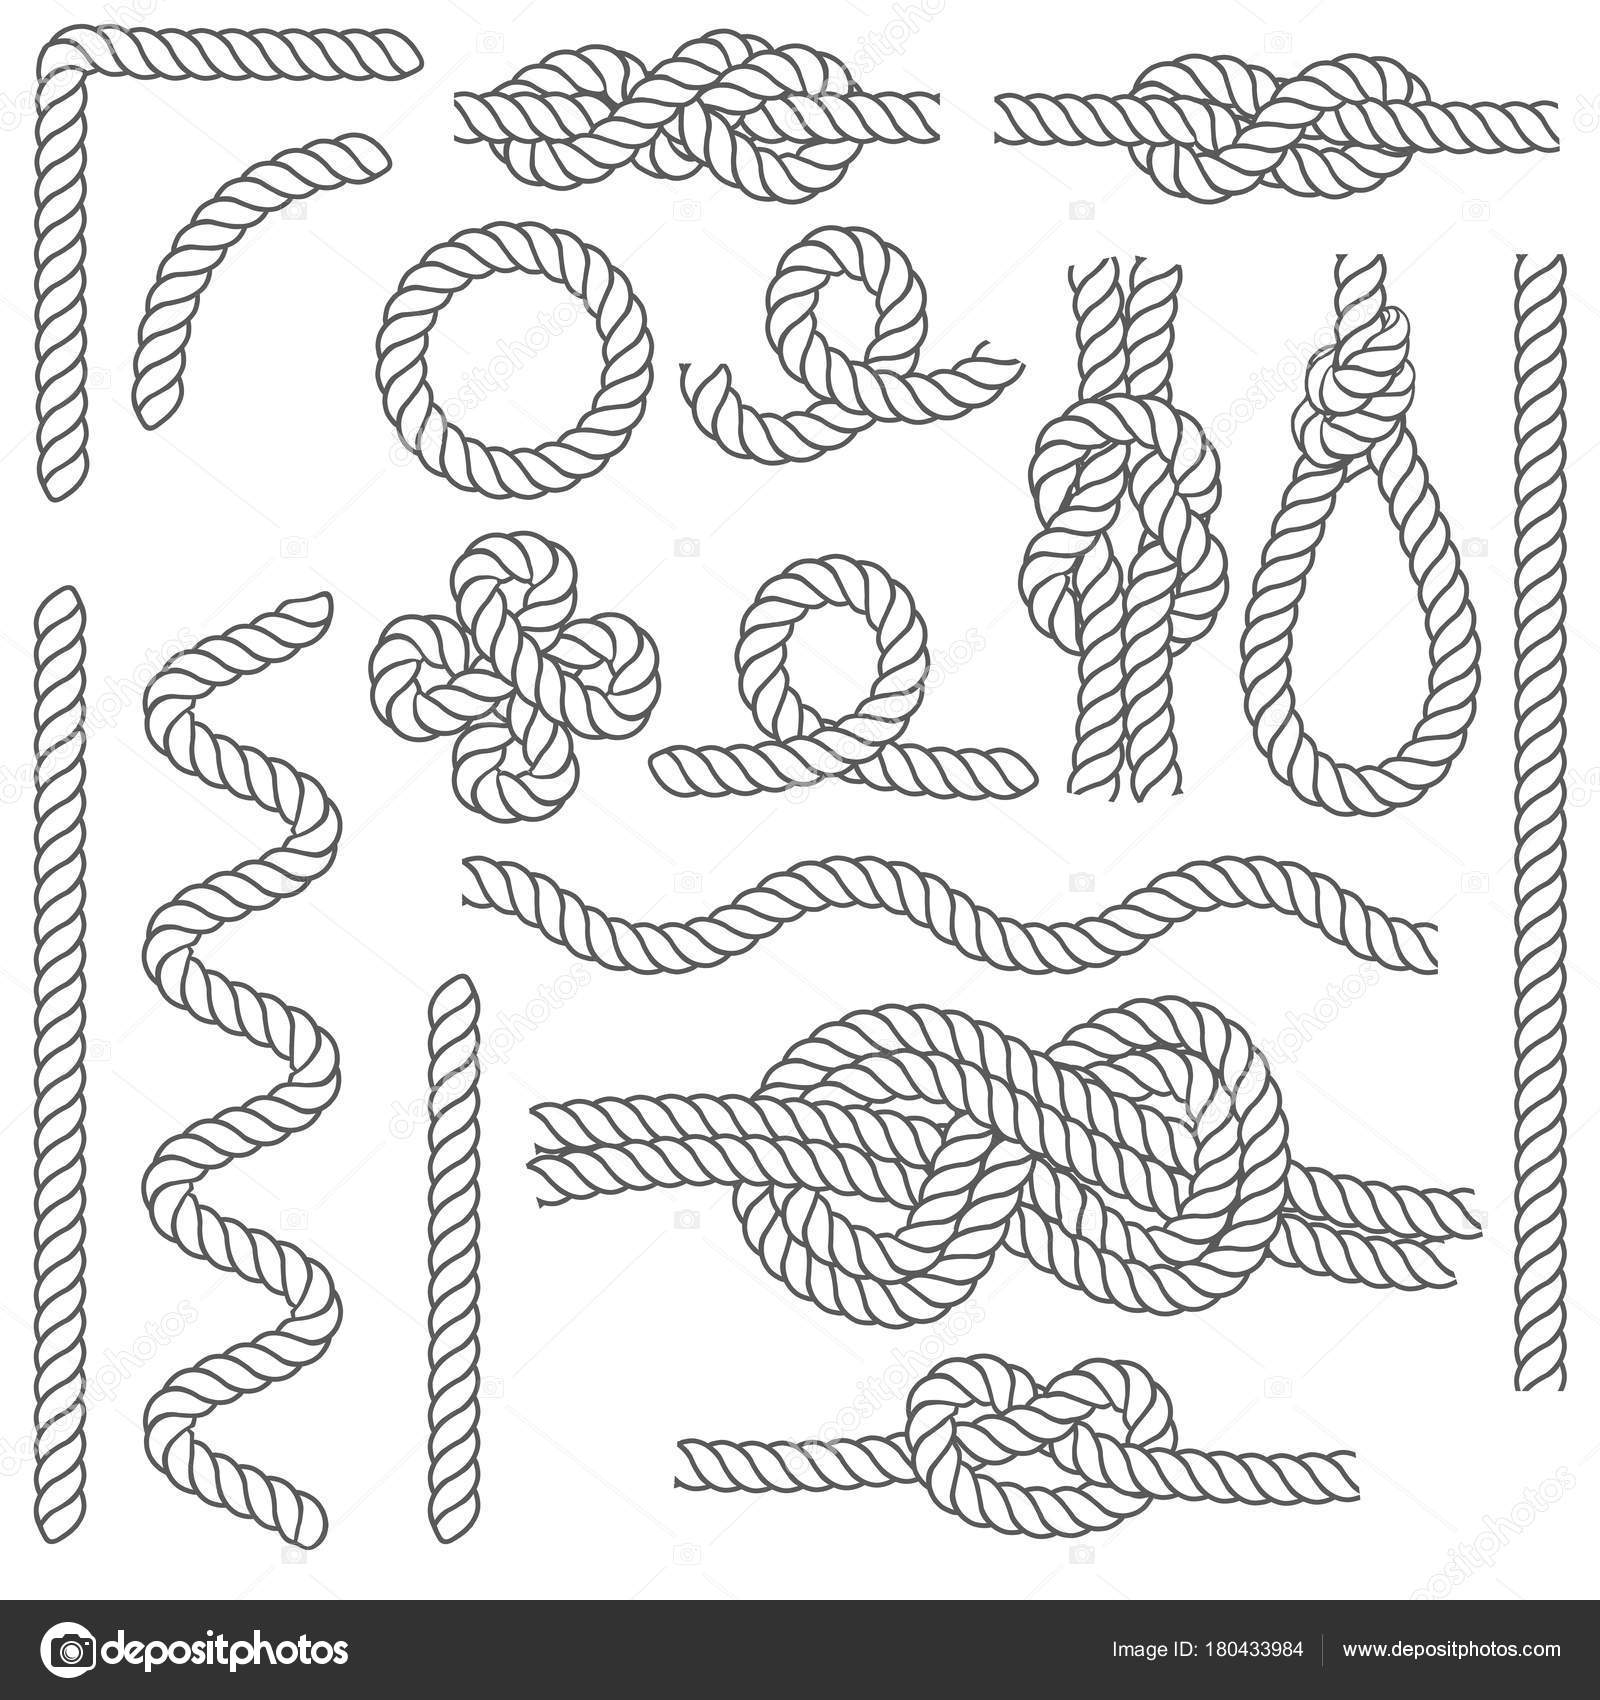 https://st3.depositphotos.com/9129706/18043/v/1600/depositphotos_180433984-stock-illustration-rope-knots-borders-black-thin.jpg